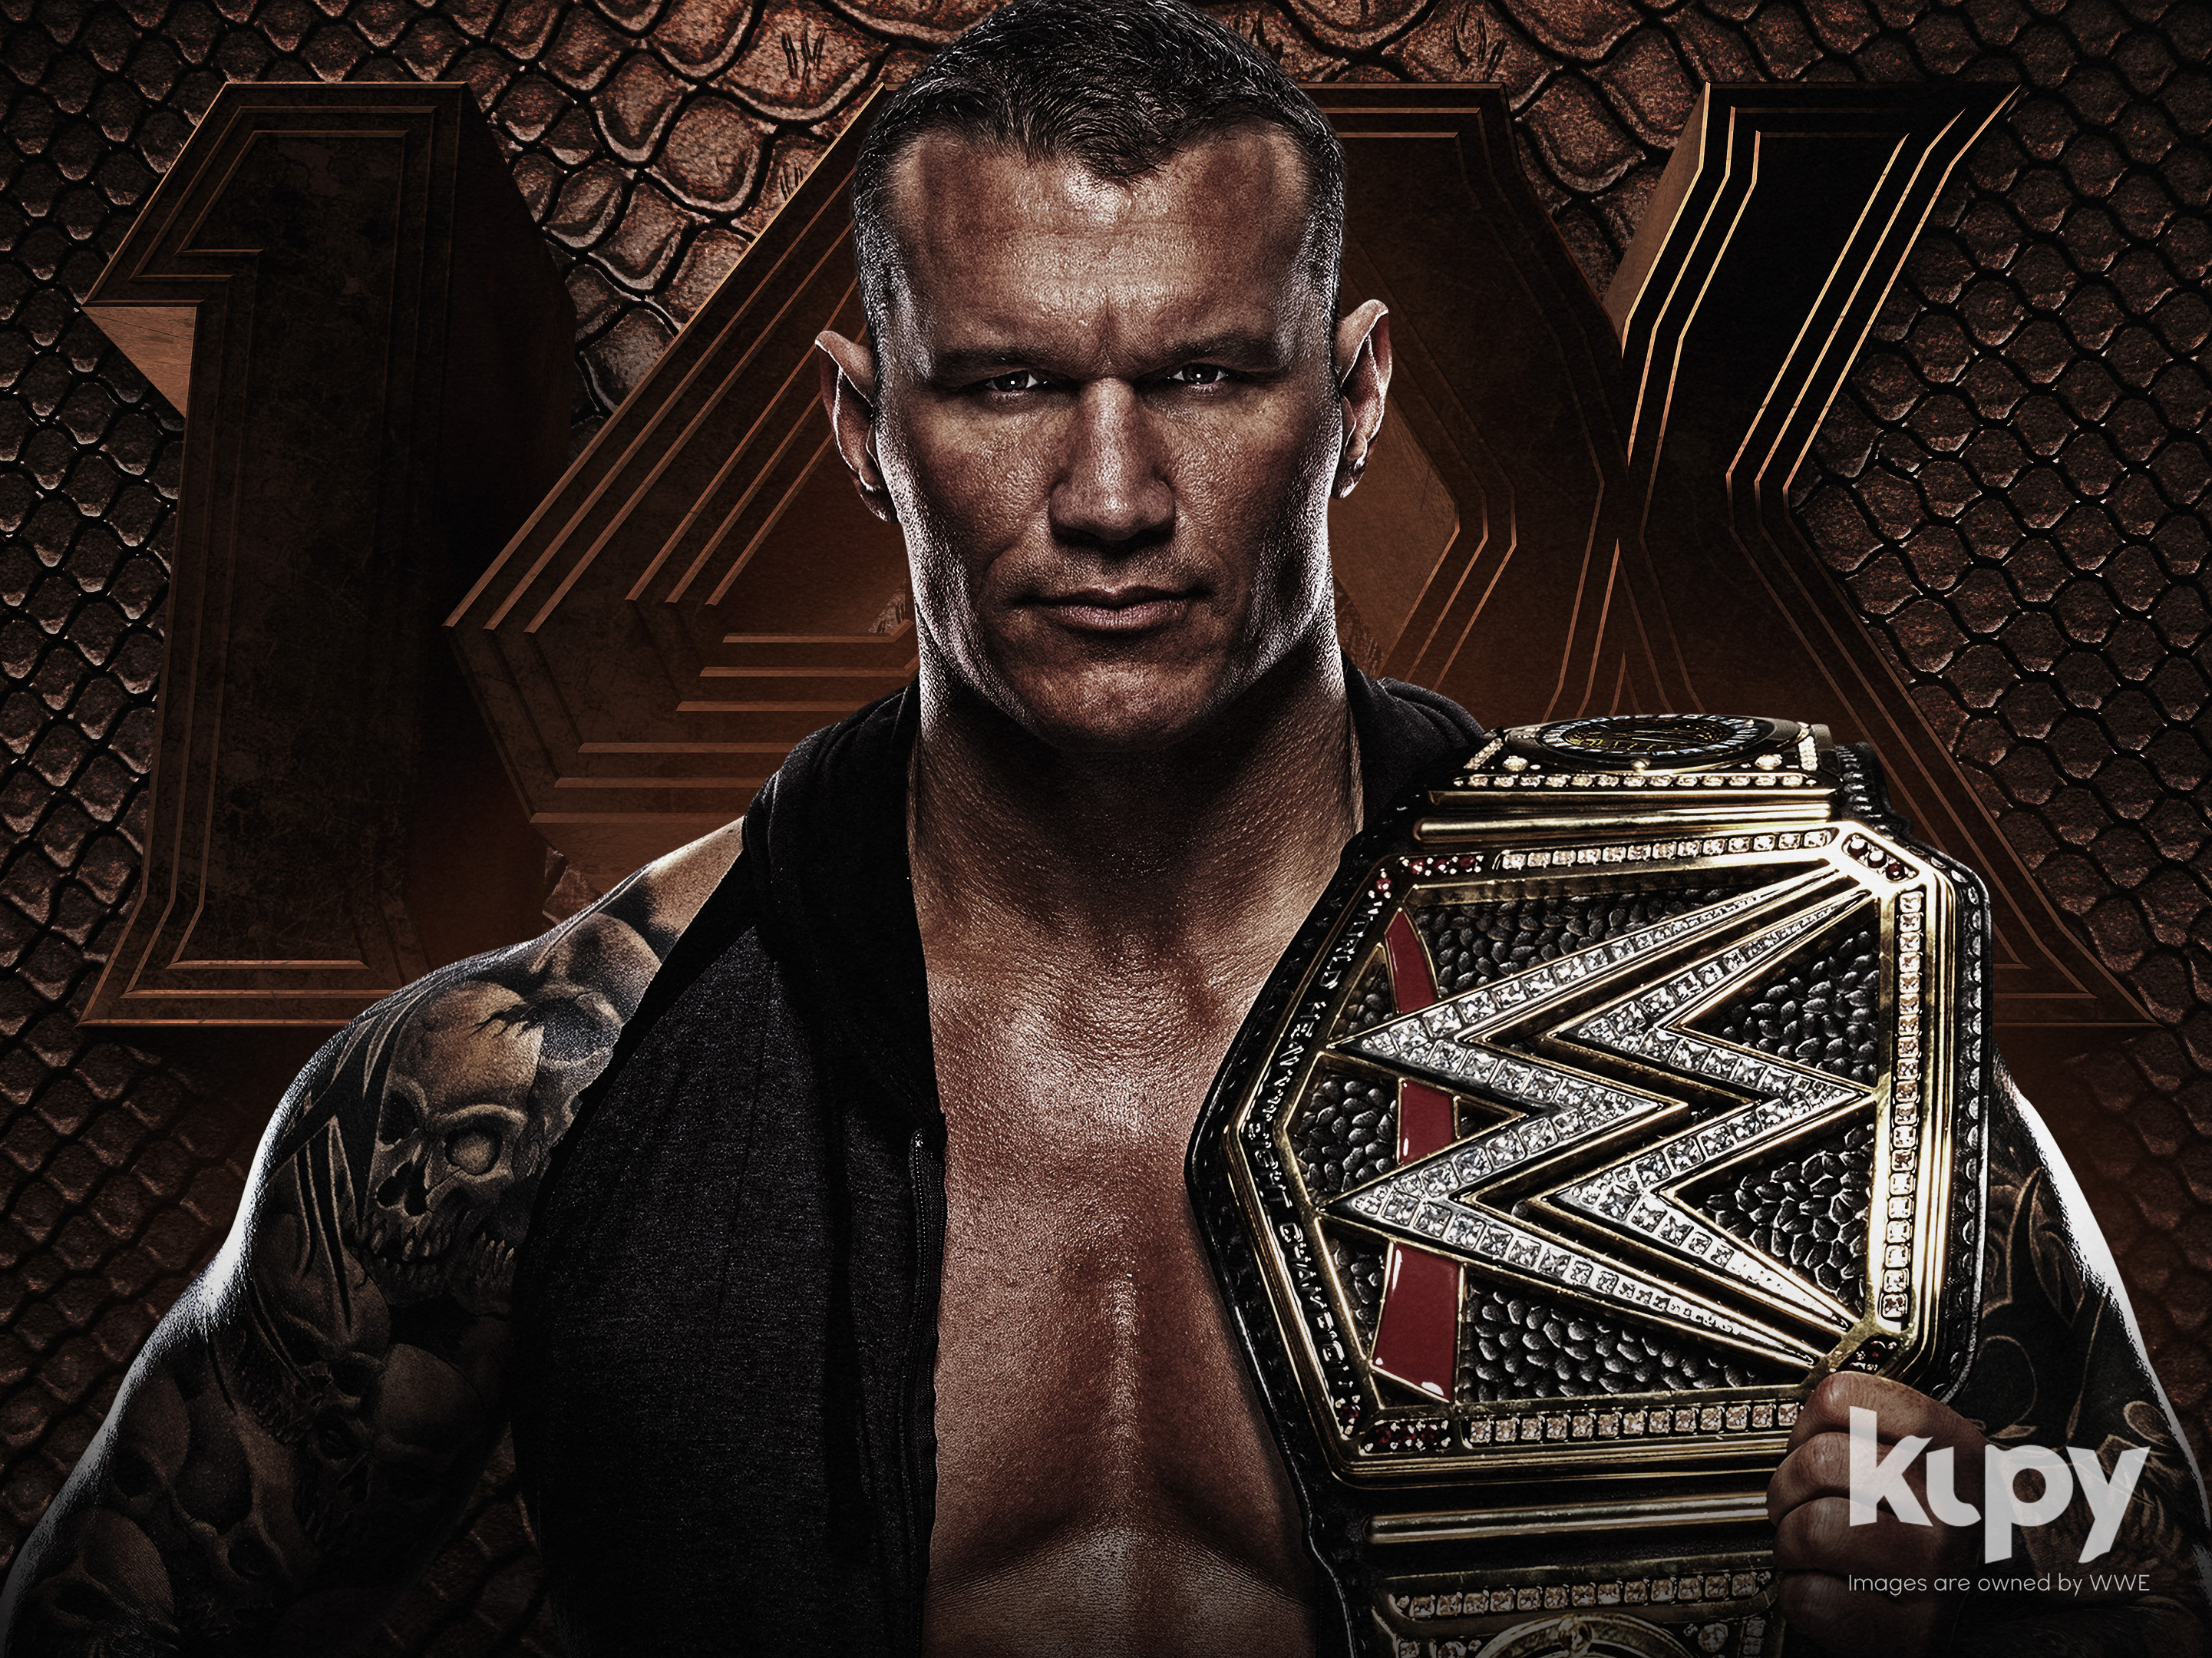 NEW 14x WWE Champion Randy Orton wallpaper! - Kupy Wrestling Wallpapers